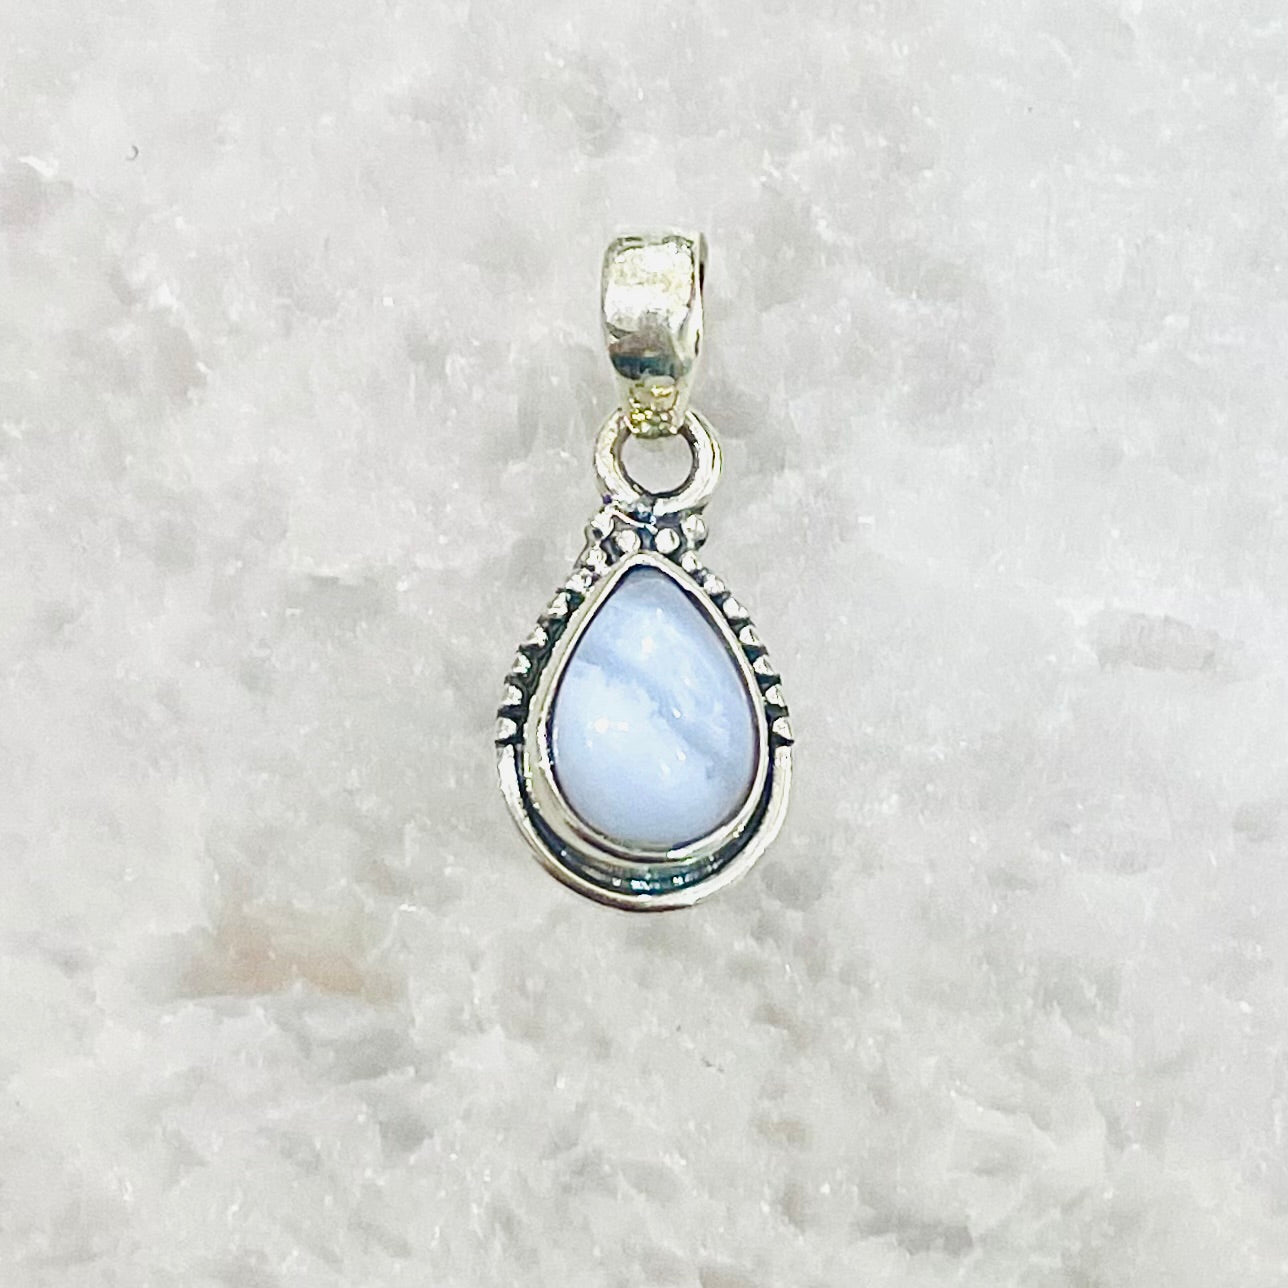 Blue Lace Agate tear drop pendant in sterling silver